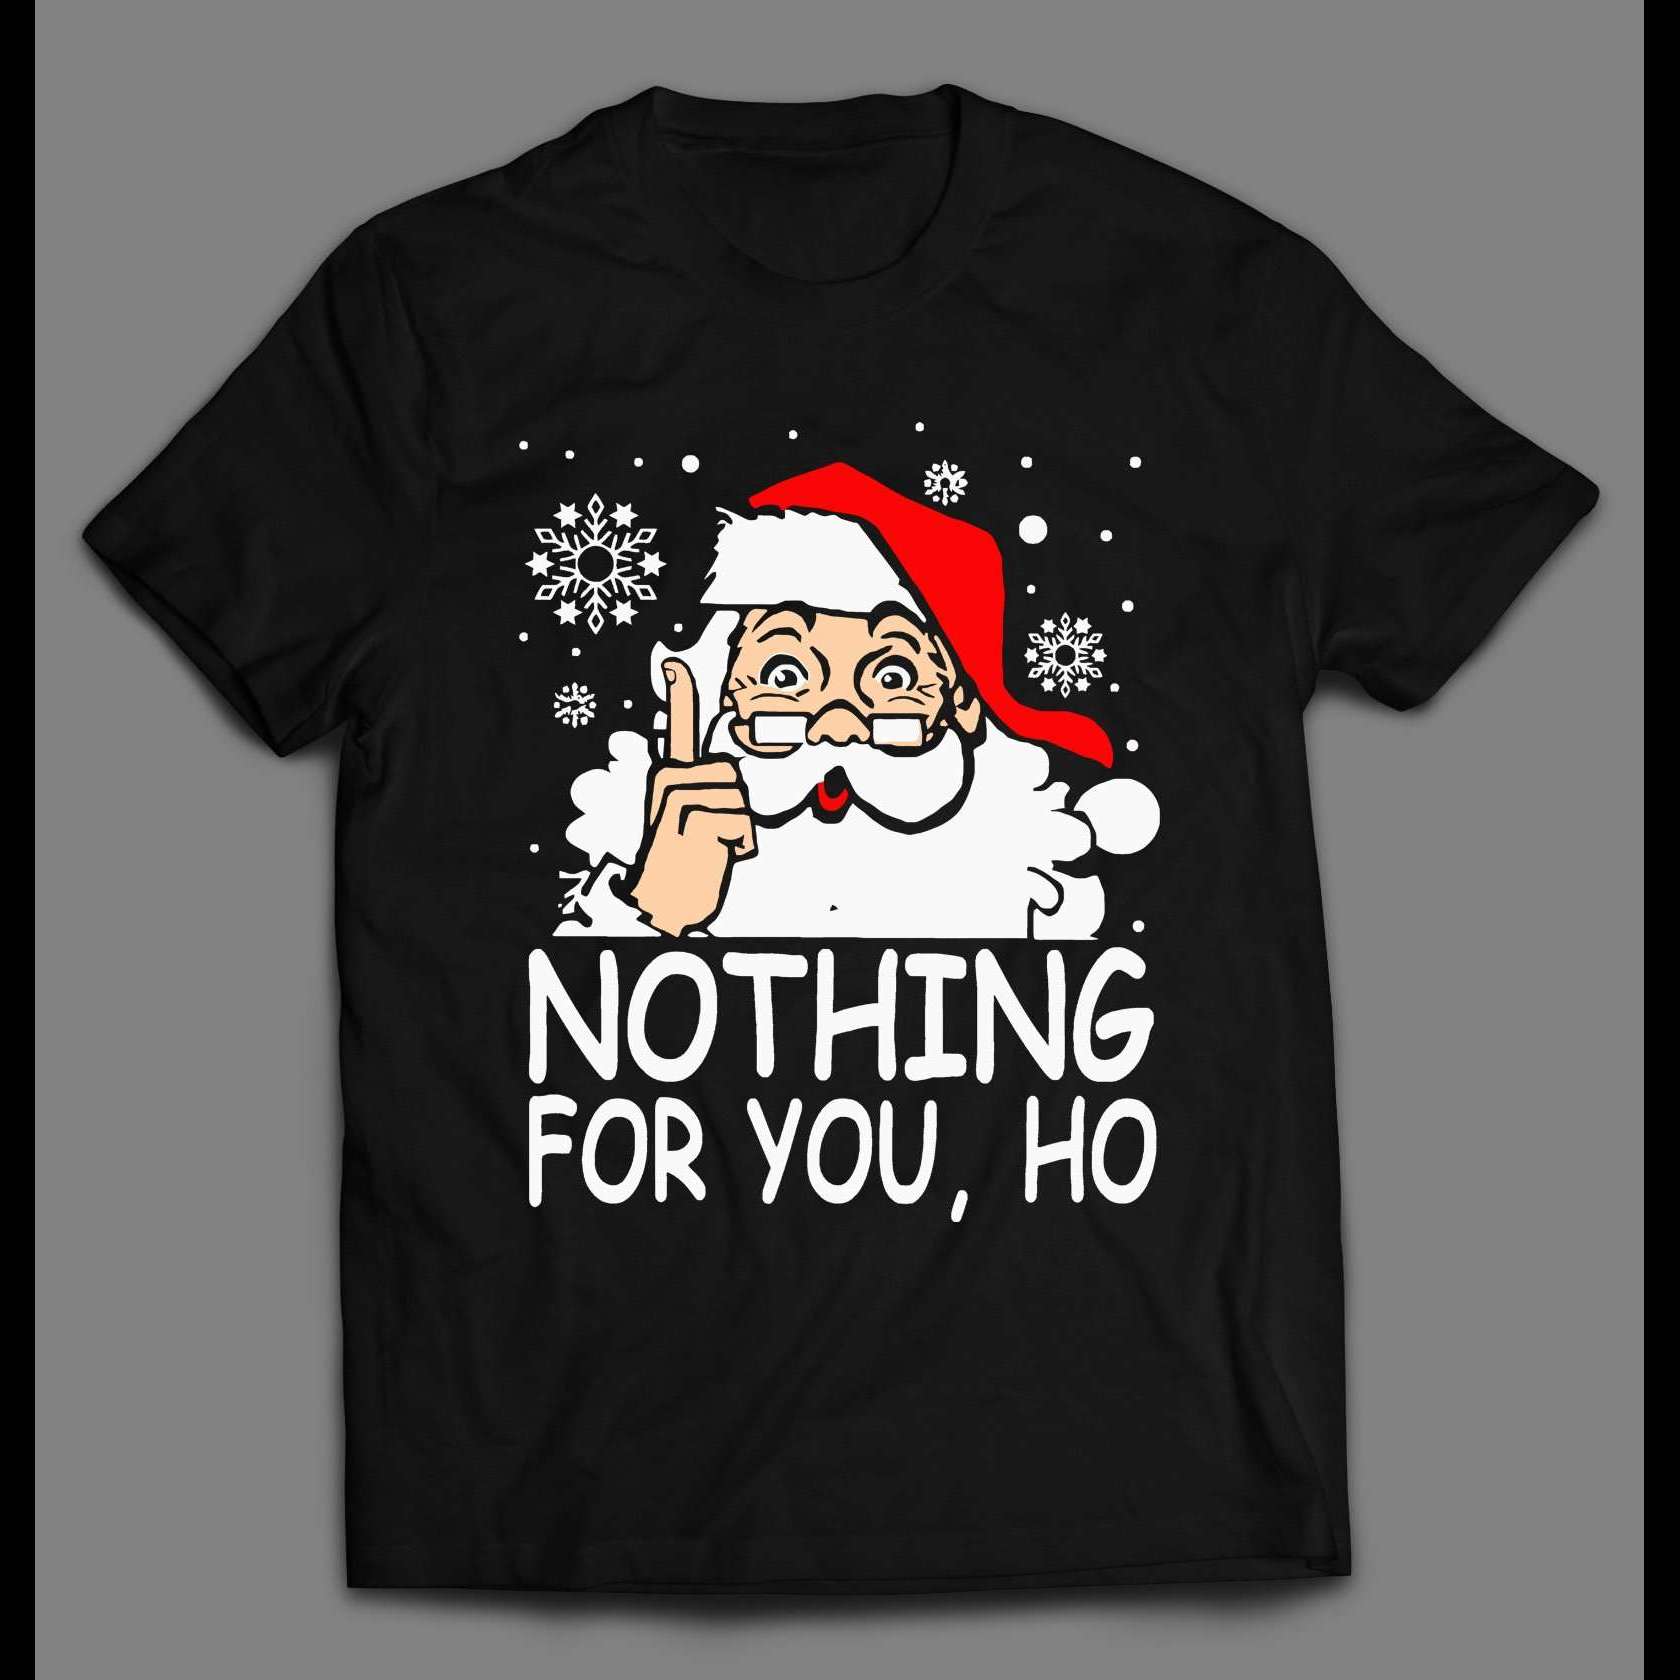 OldSkool SANTA YOU FOR SHIRT CHRISTMAS CLAUS NOTHING Shirts – HO! QUALITY HIGH